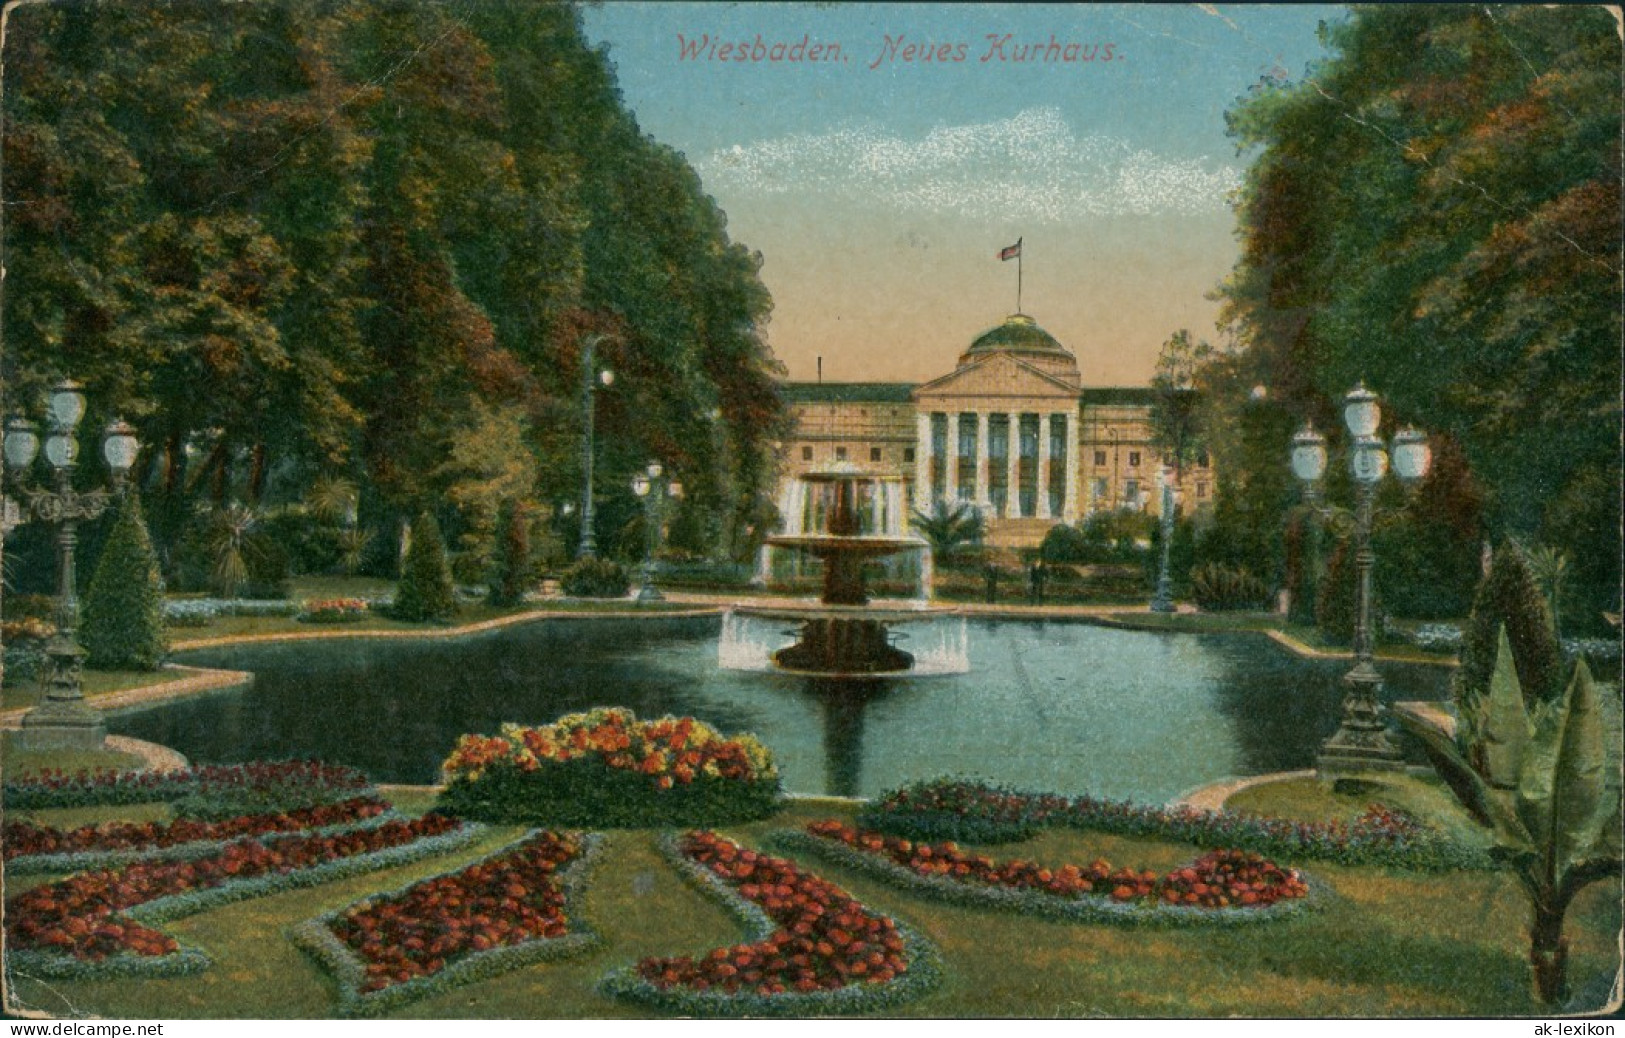 Wiesbaden Kurhaus, Park, Springbrunnen, Blumen Beete, Teich 1921 - Wiesbaden